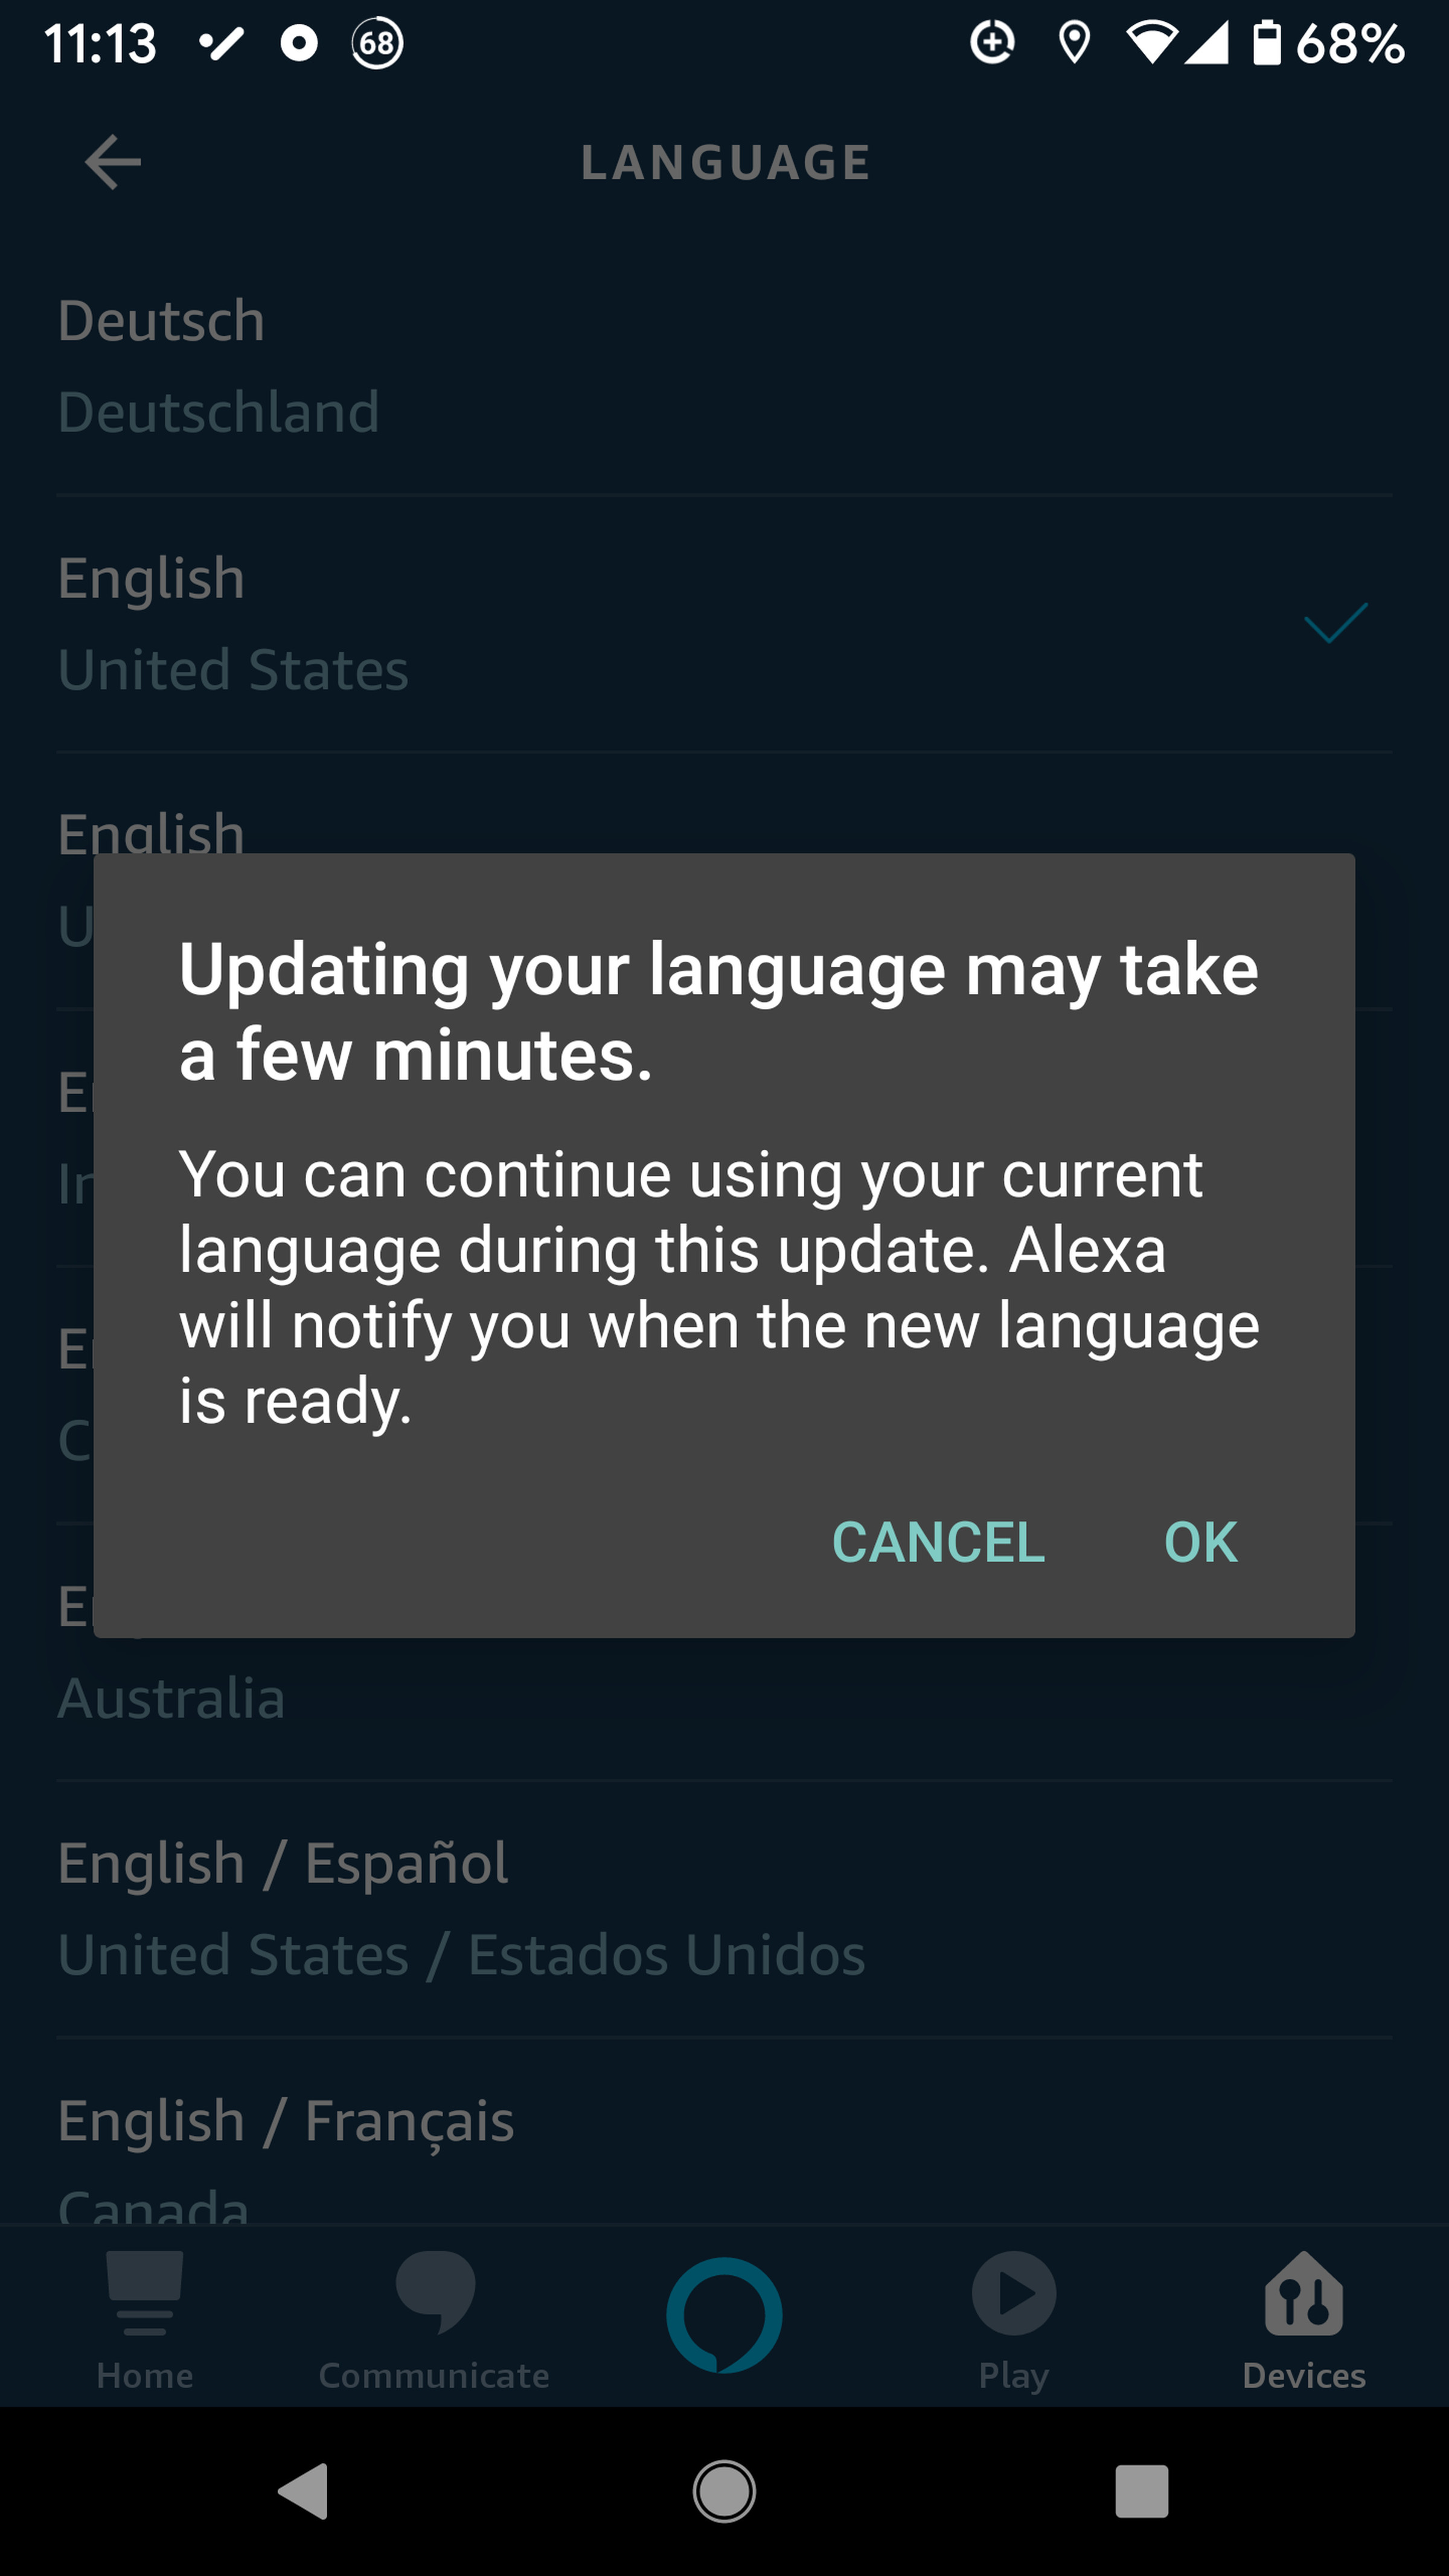 Change Alexa’s language